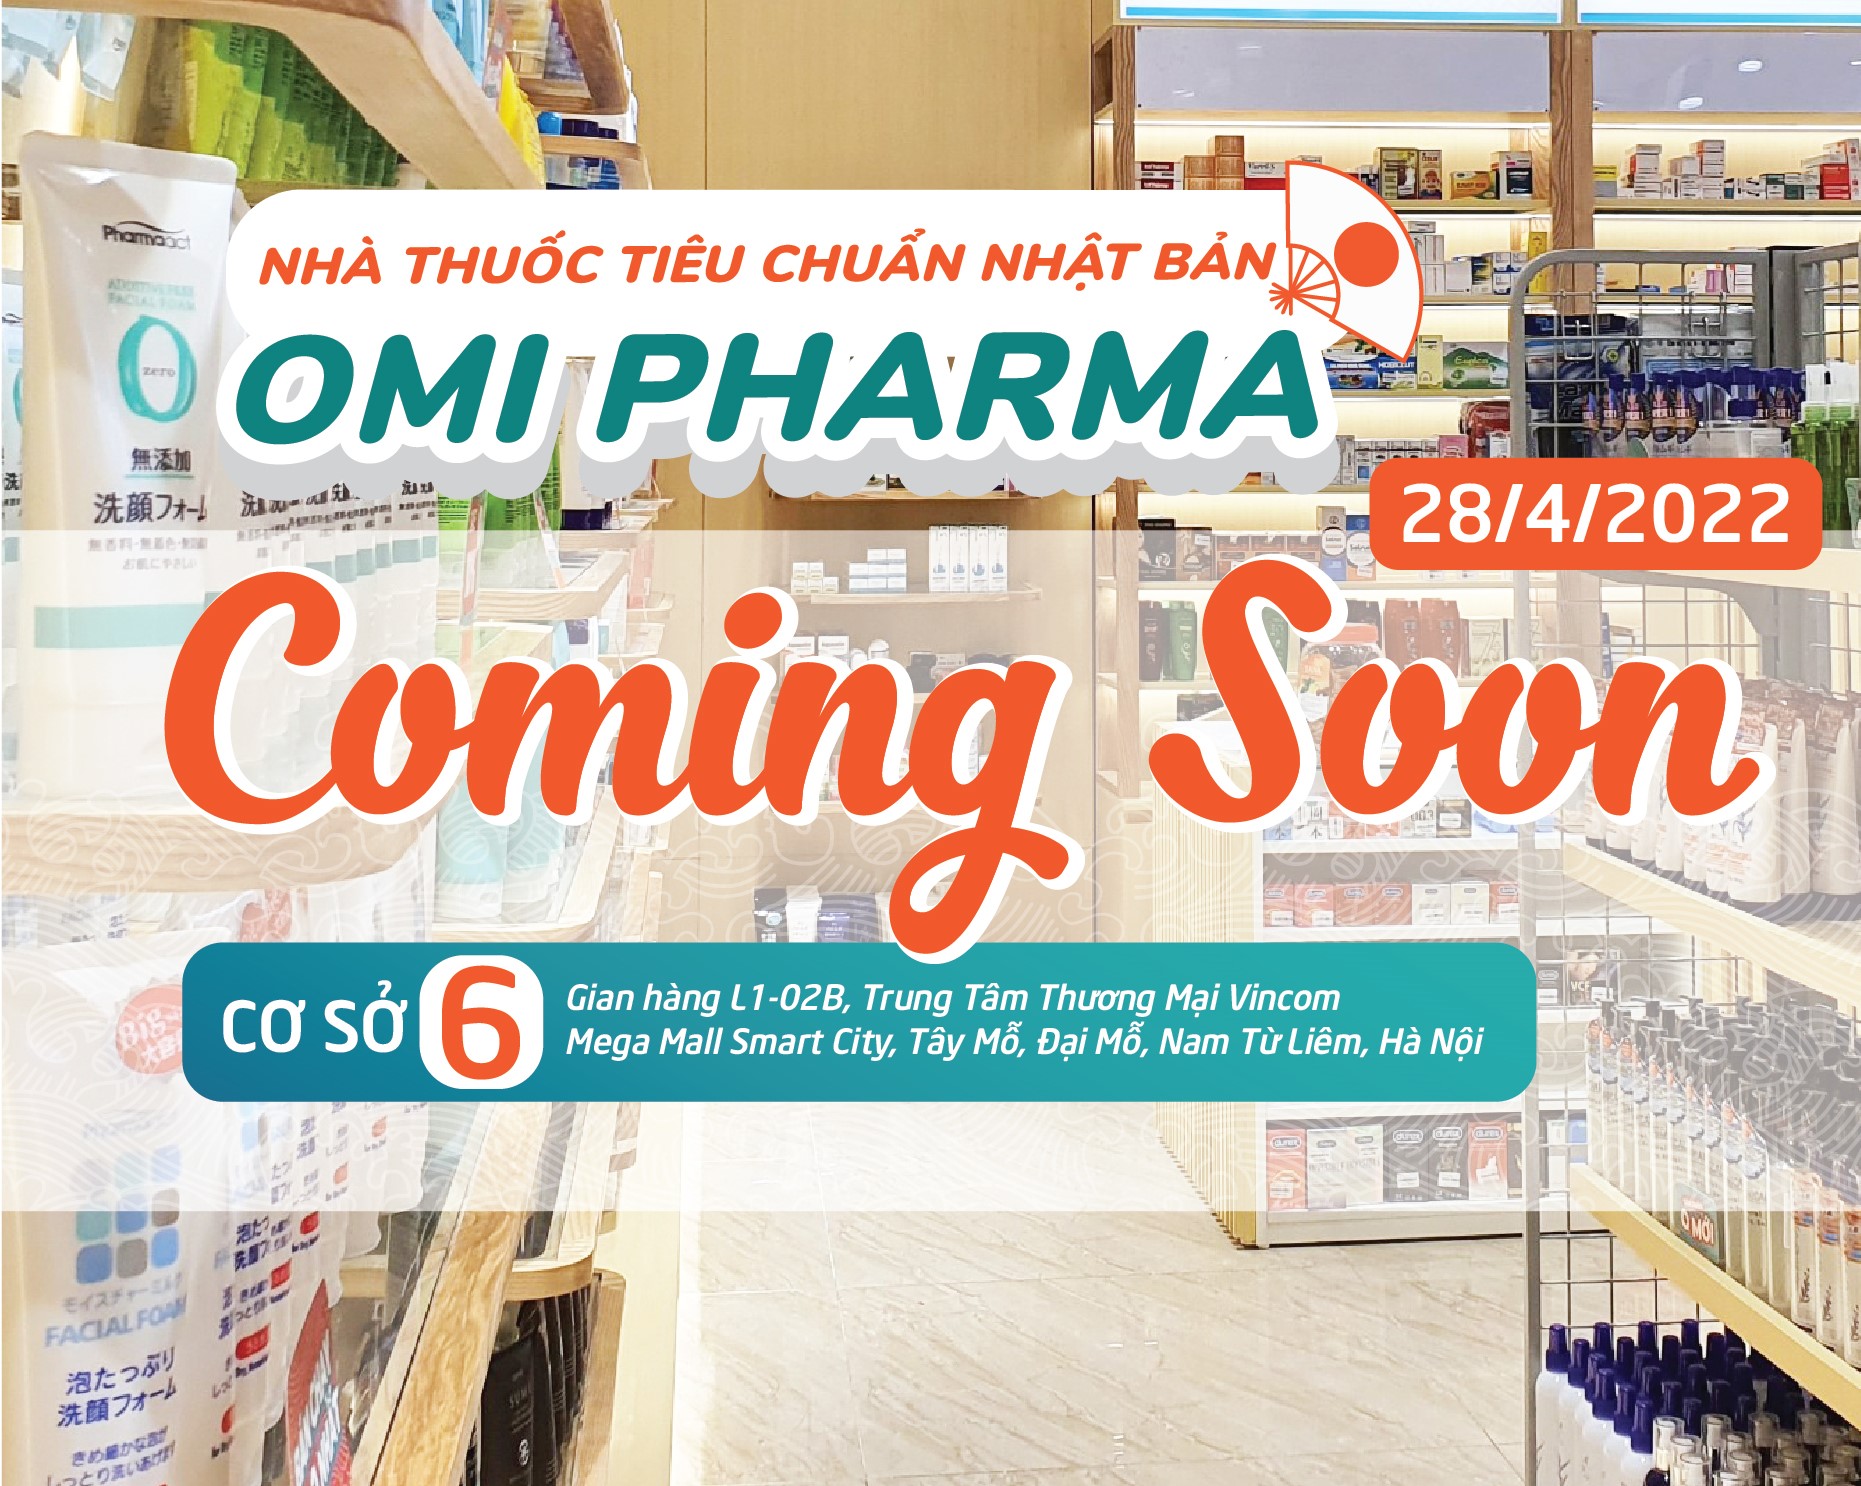 Sắp ra mắt cơ sở 6 Omi Pharma tại Vincom Megamall Smart City